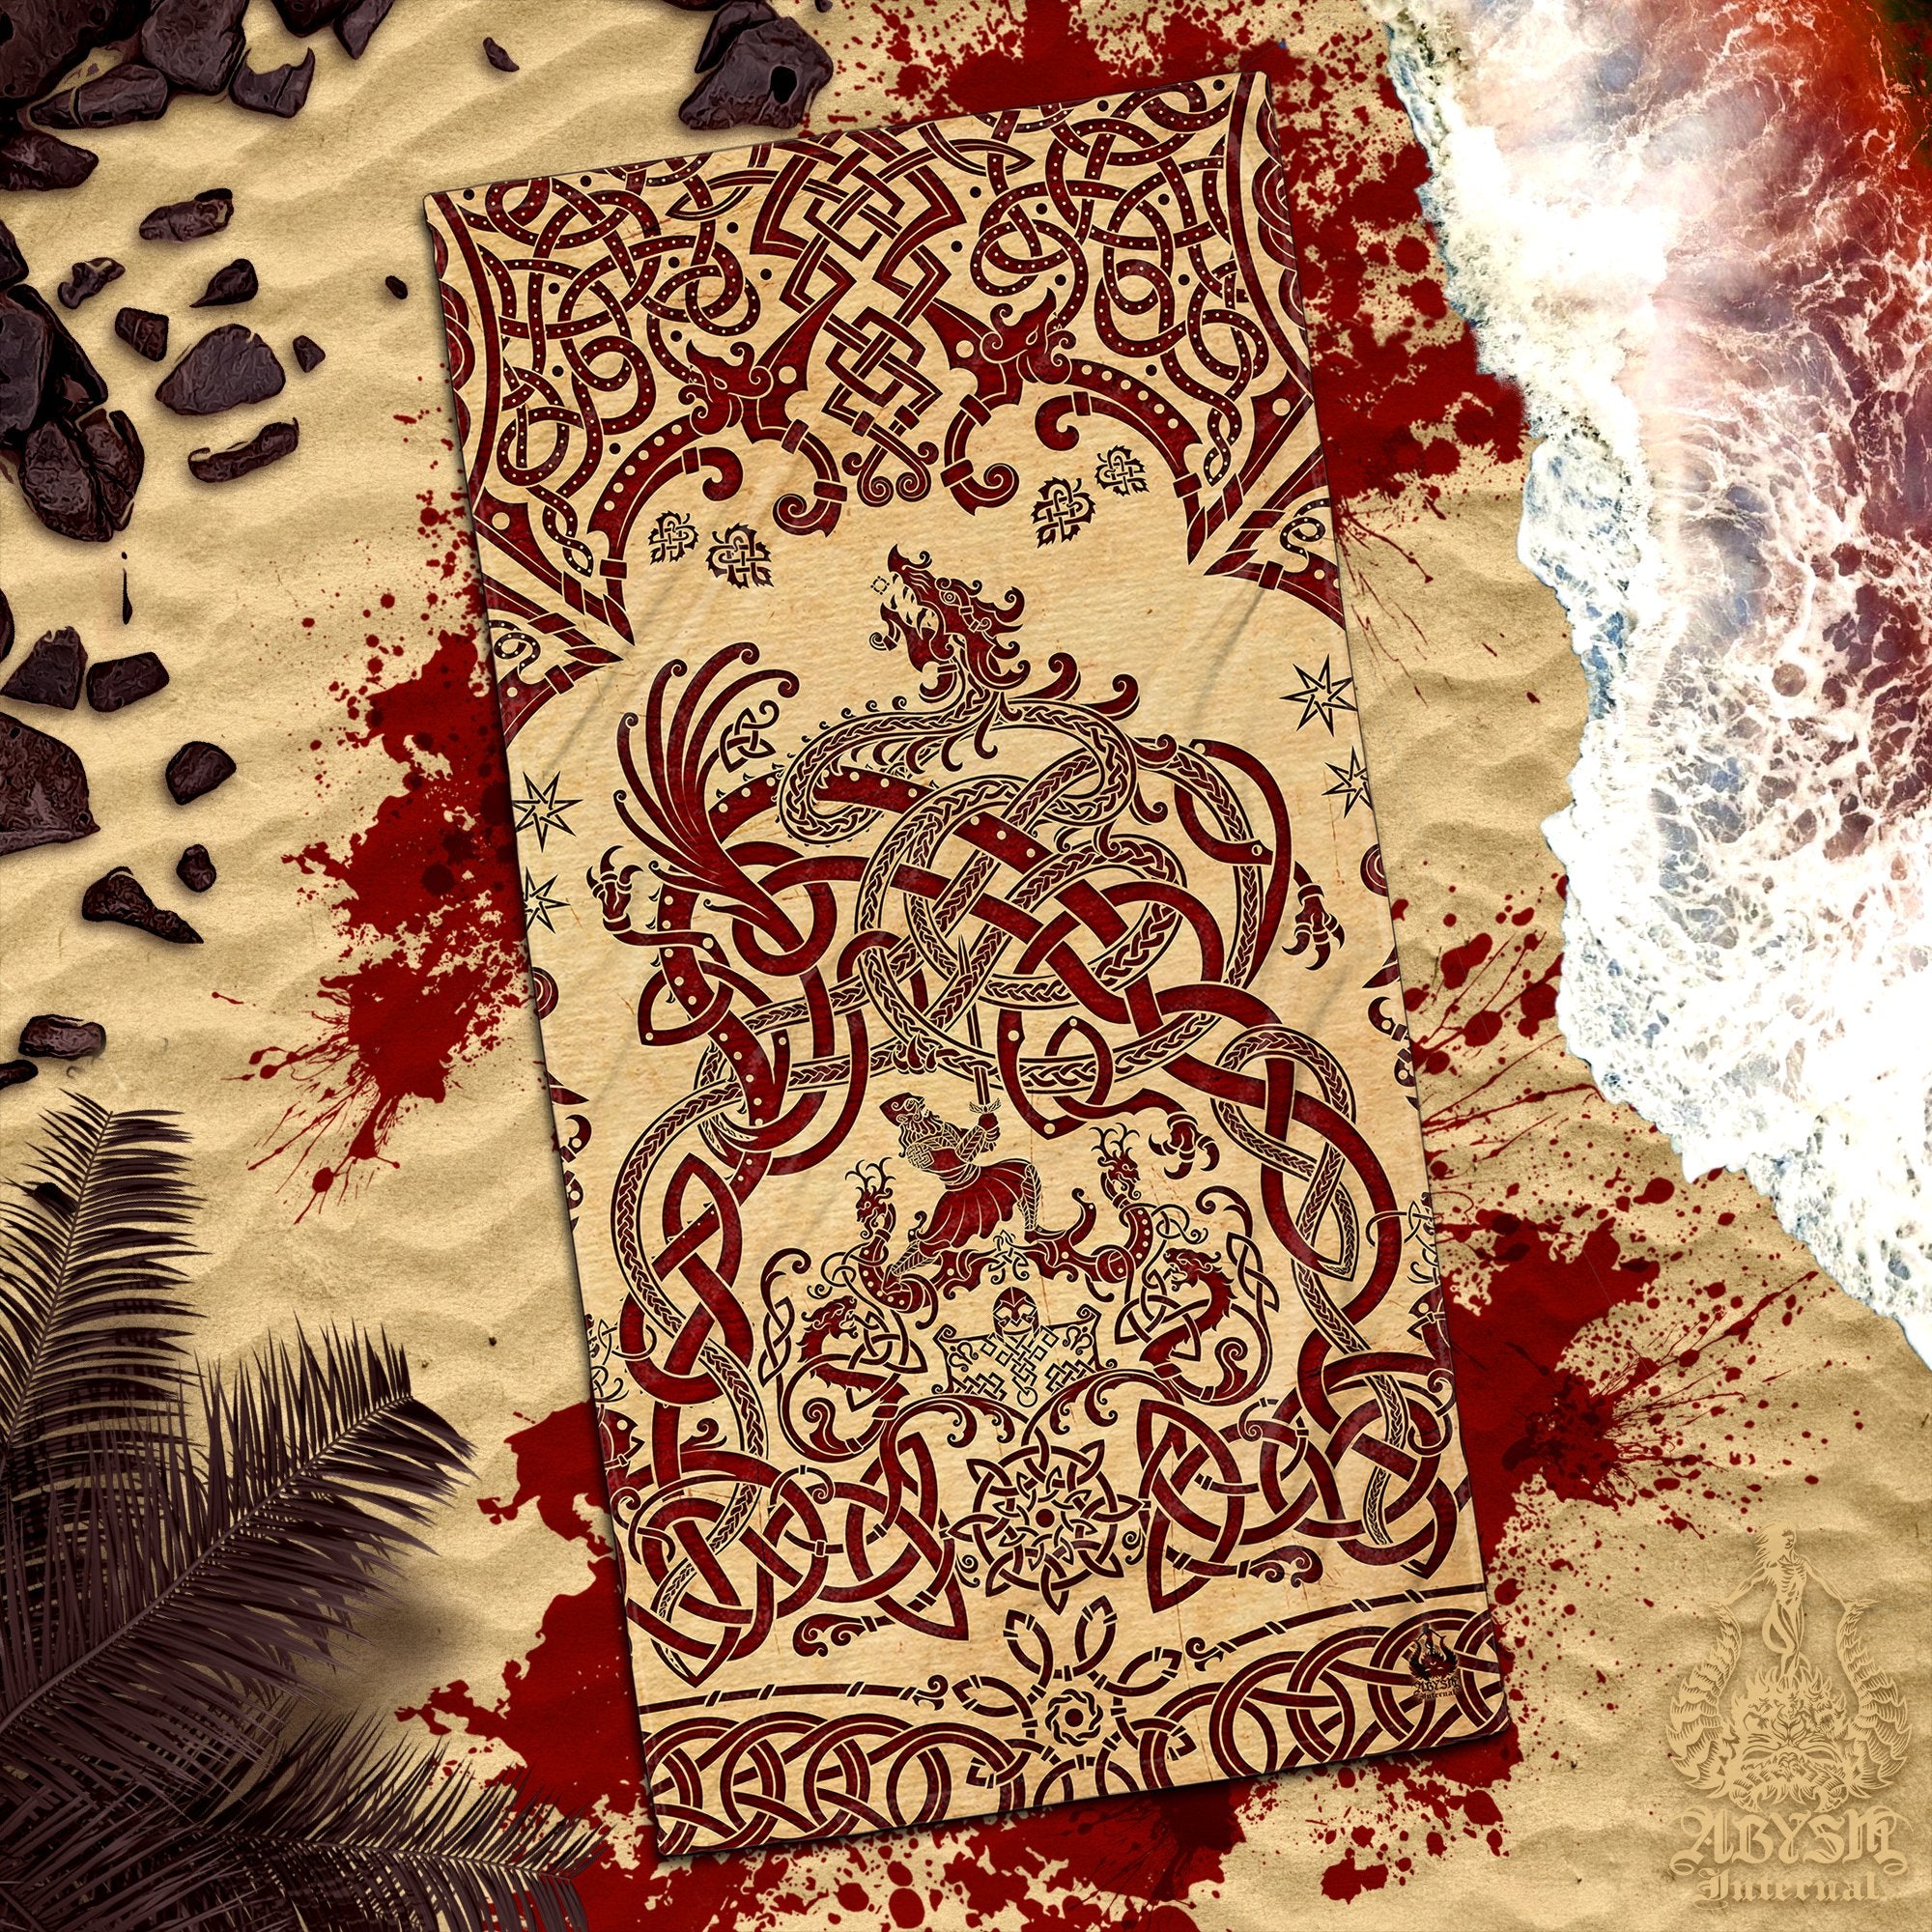 ALL Viking Beach Towel Designs, Dragon Fafnir, Norse Mythology Art - 16 Colors - Abysm Internal